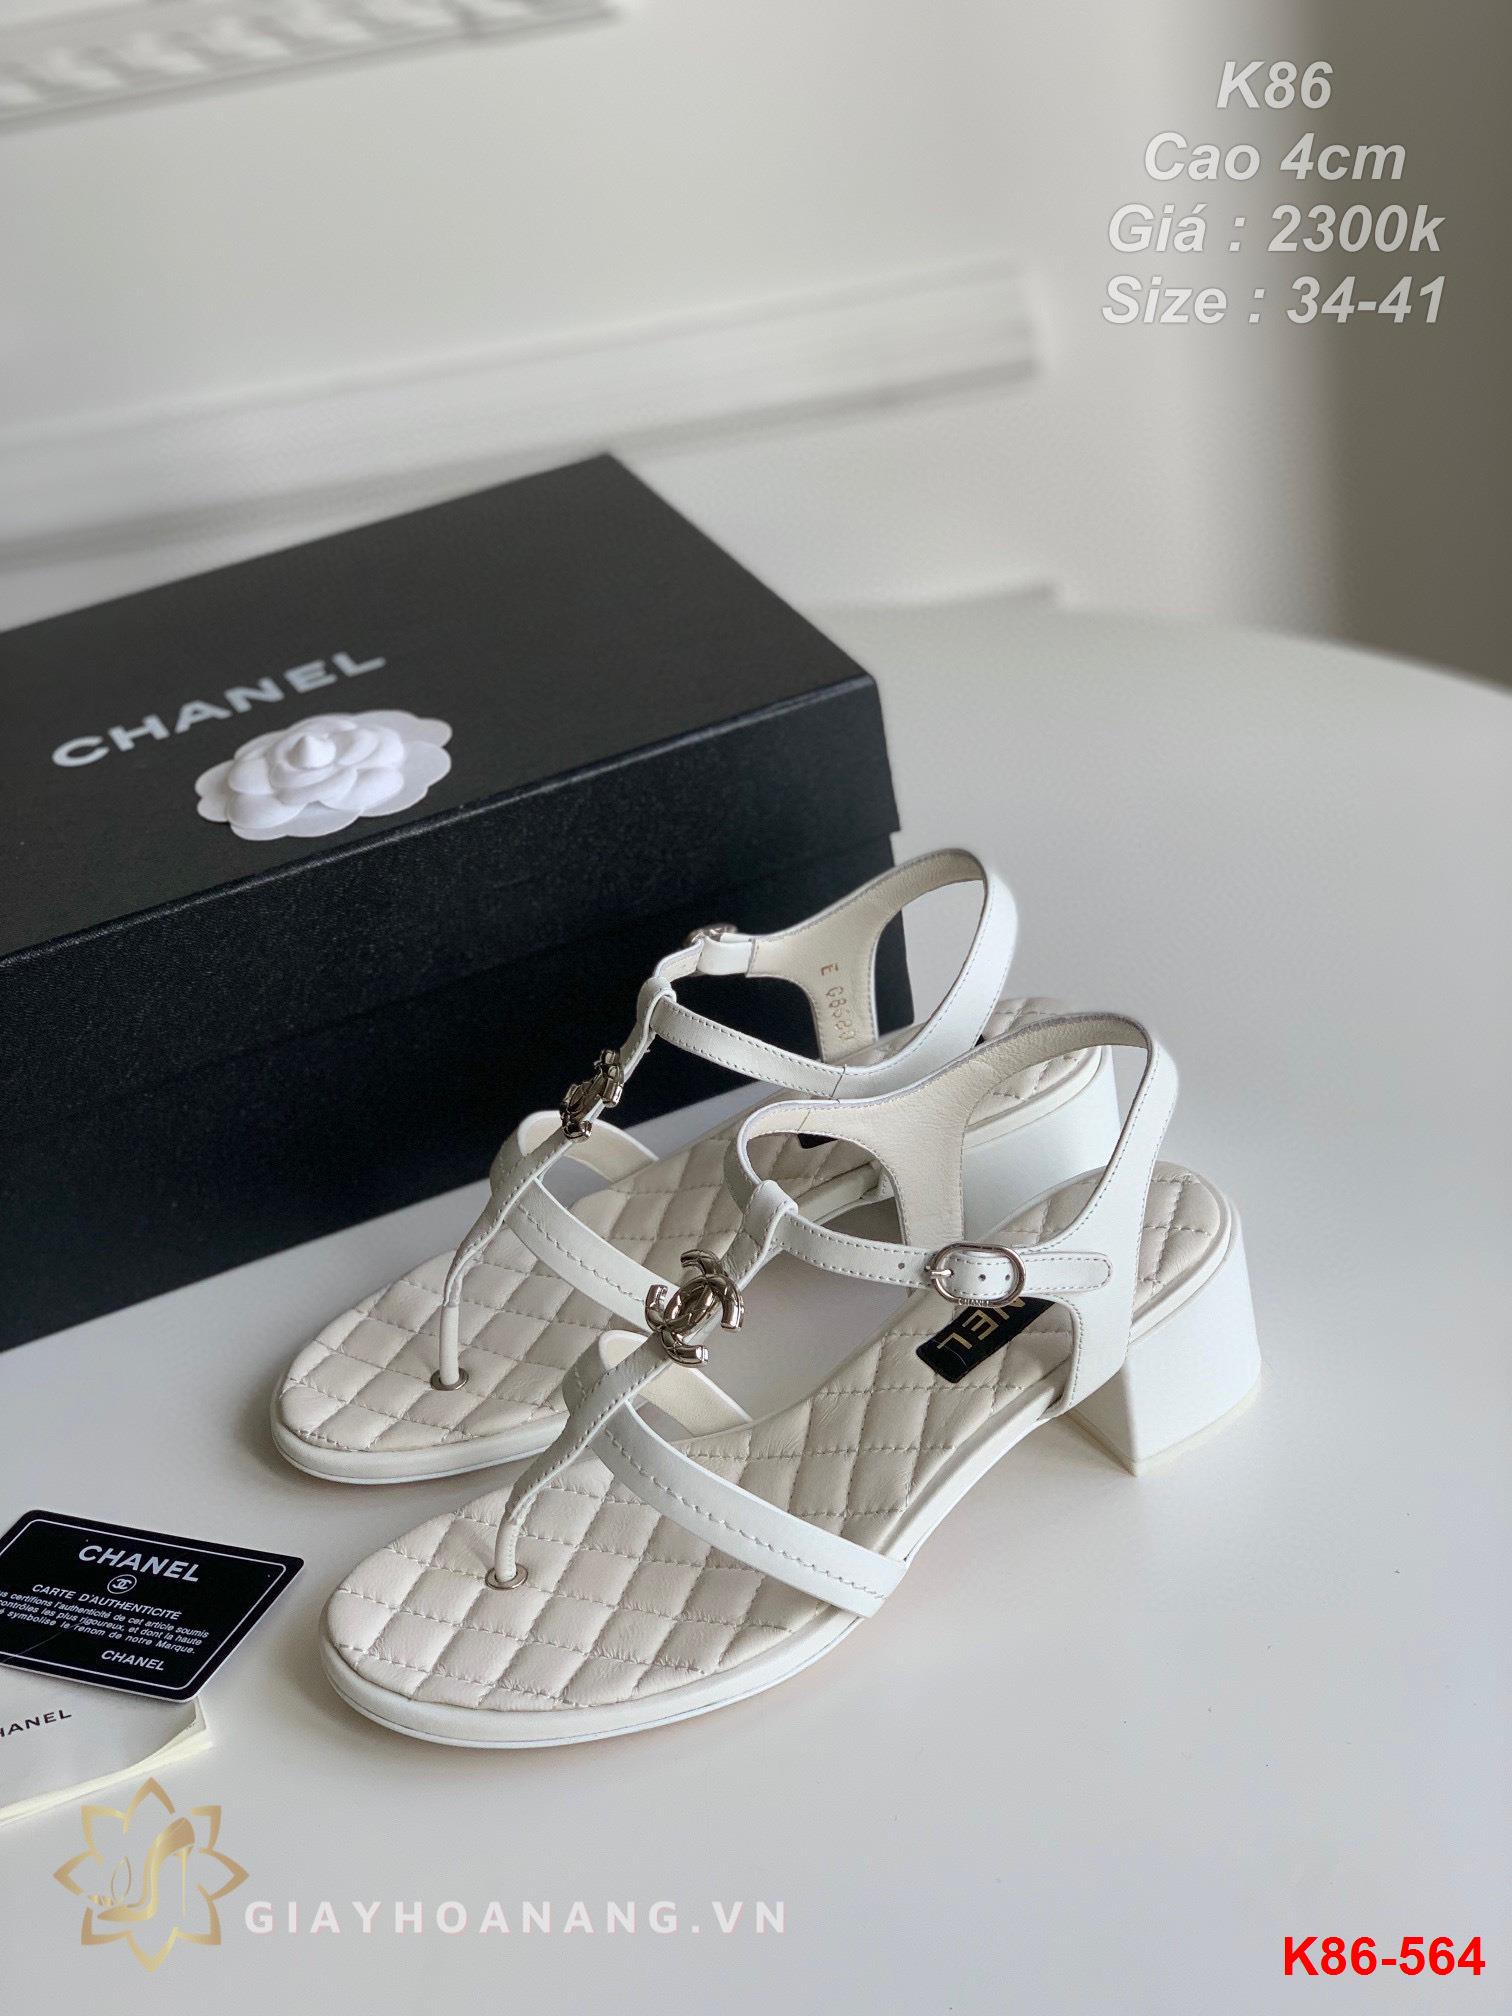 K86-564 Chanel sandal cao 4cm siêu cấp